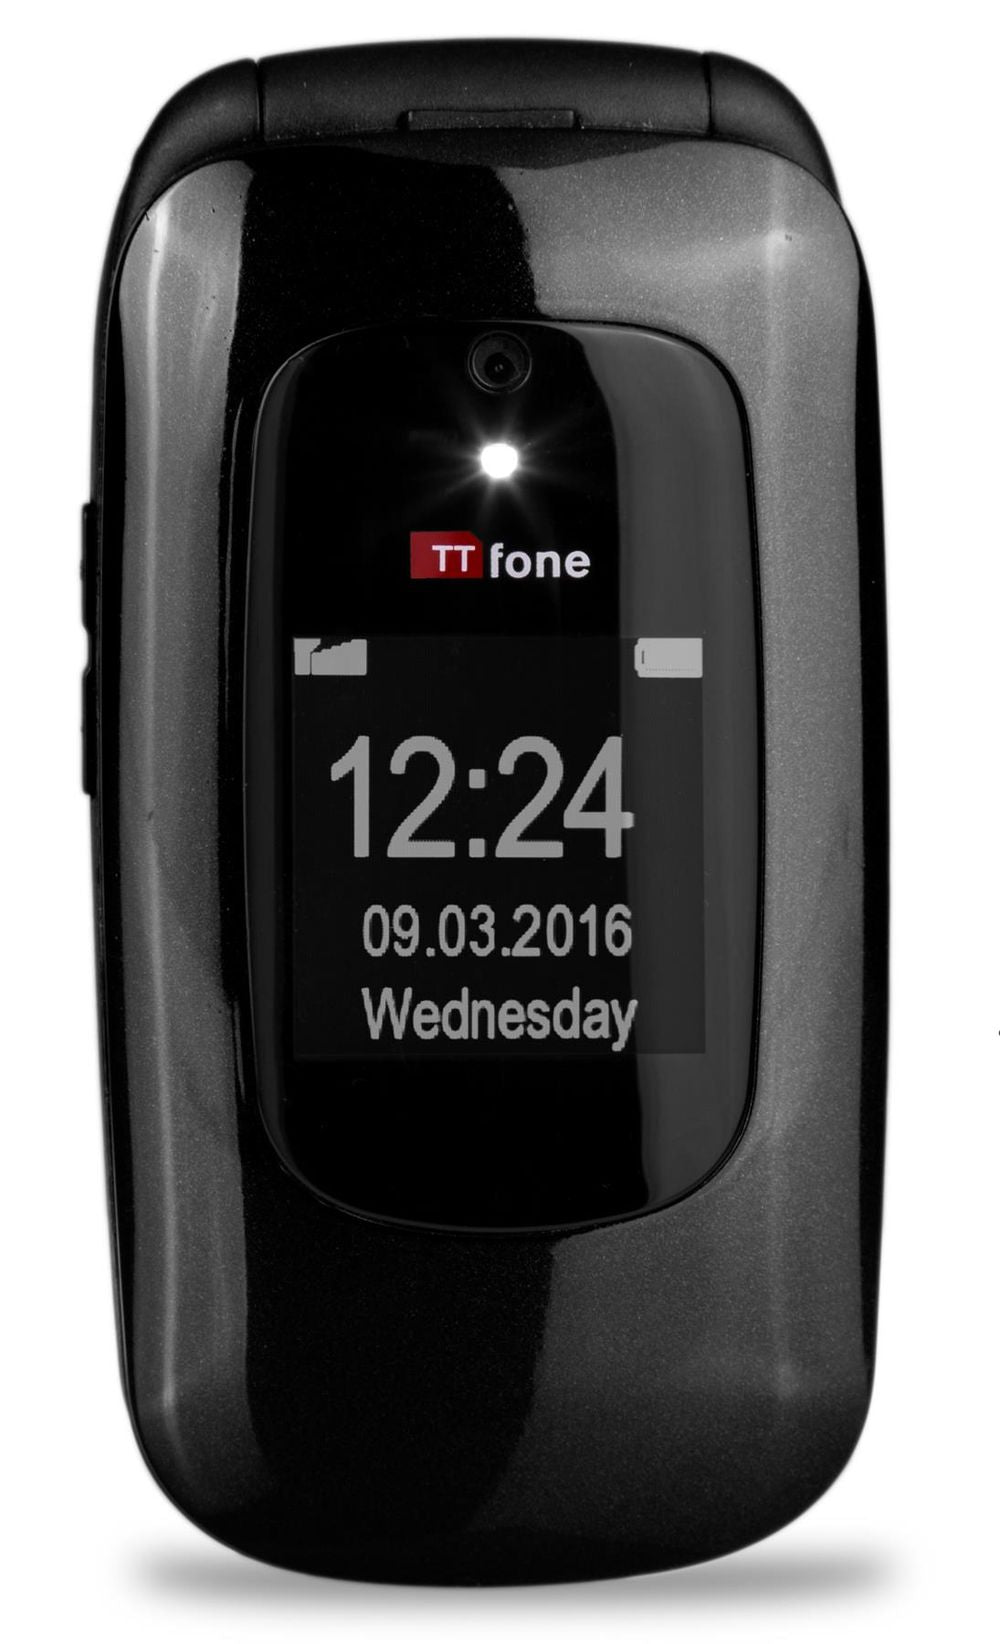 TTfone TT750 Lunar BLACK Flip Folding Dual Screen Big Button Mobile Phone with Dock Charger and Vodafone Sim Card